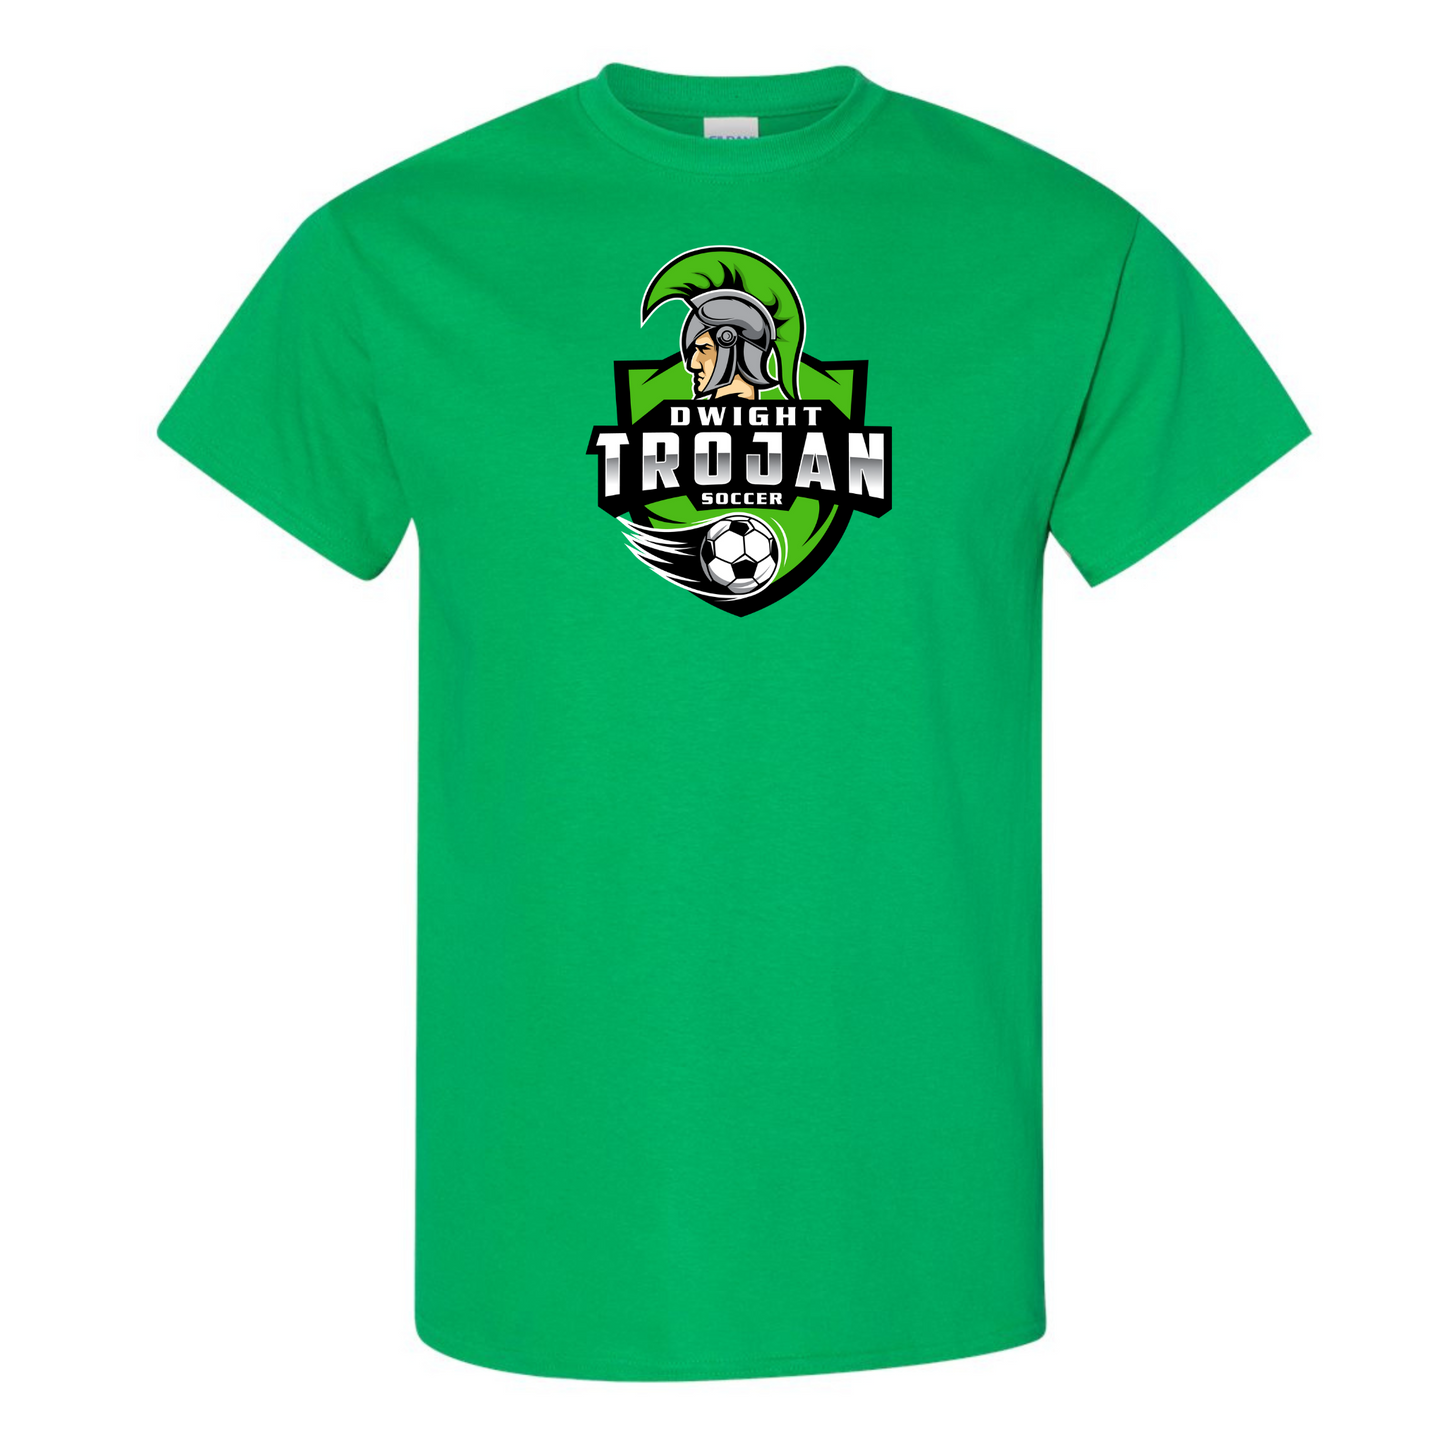 Trojan Soccer -  Gildan Tee